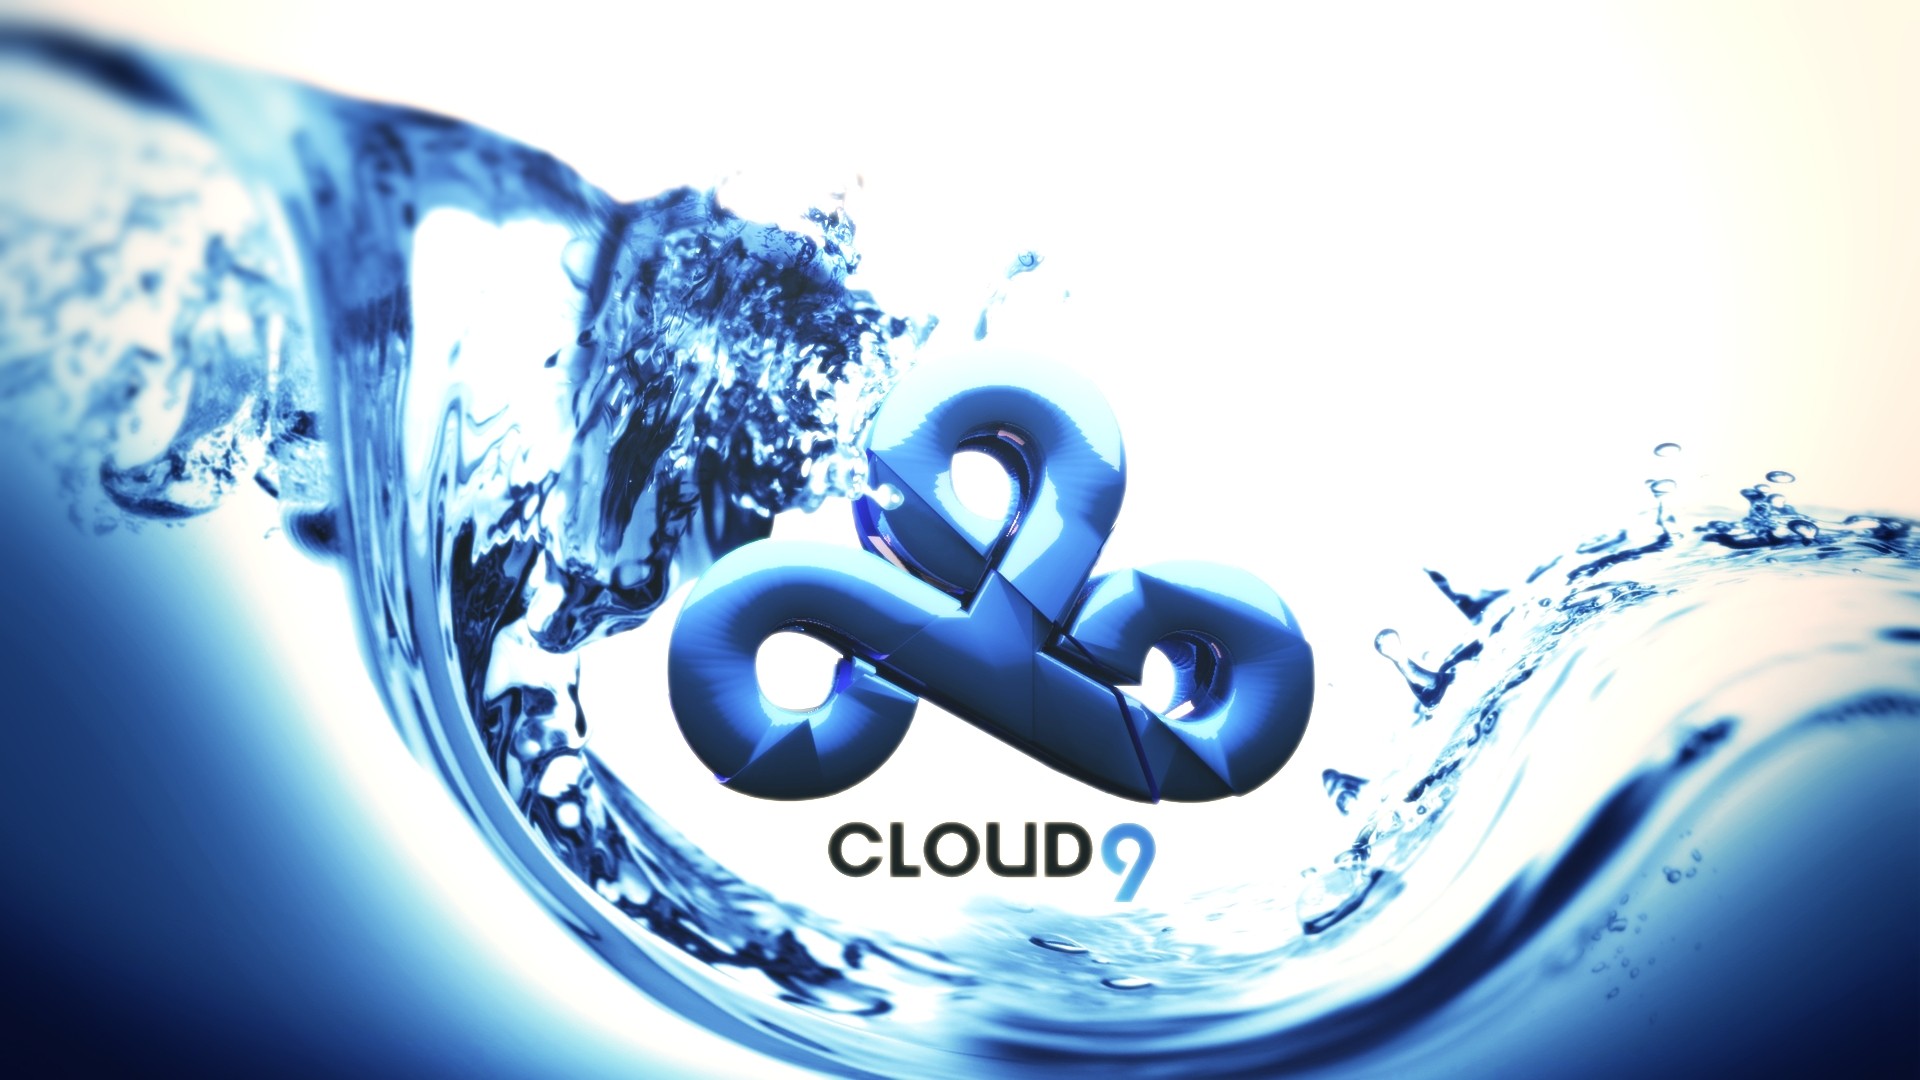 Cloud 9 Hd Wallpaper